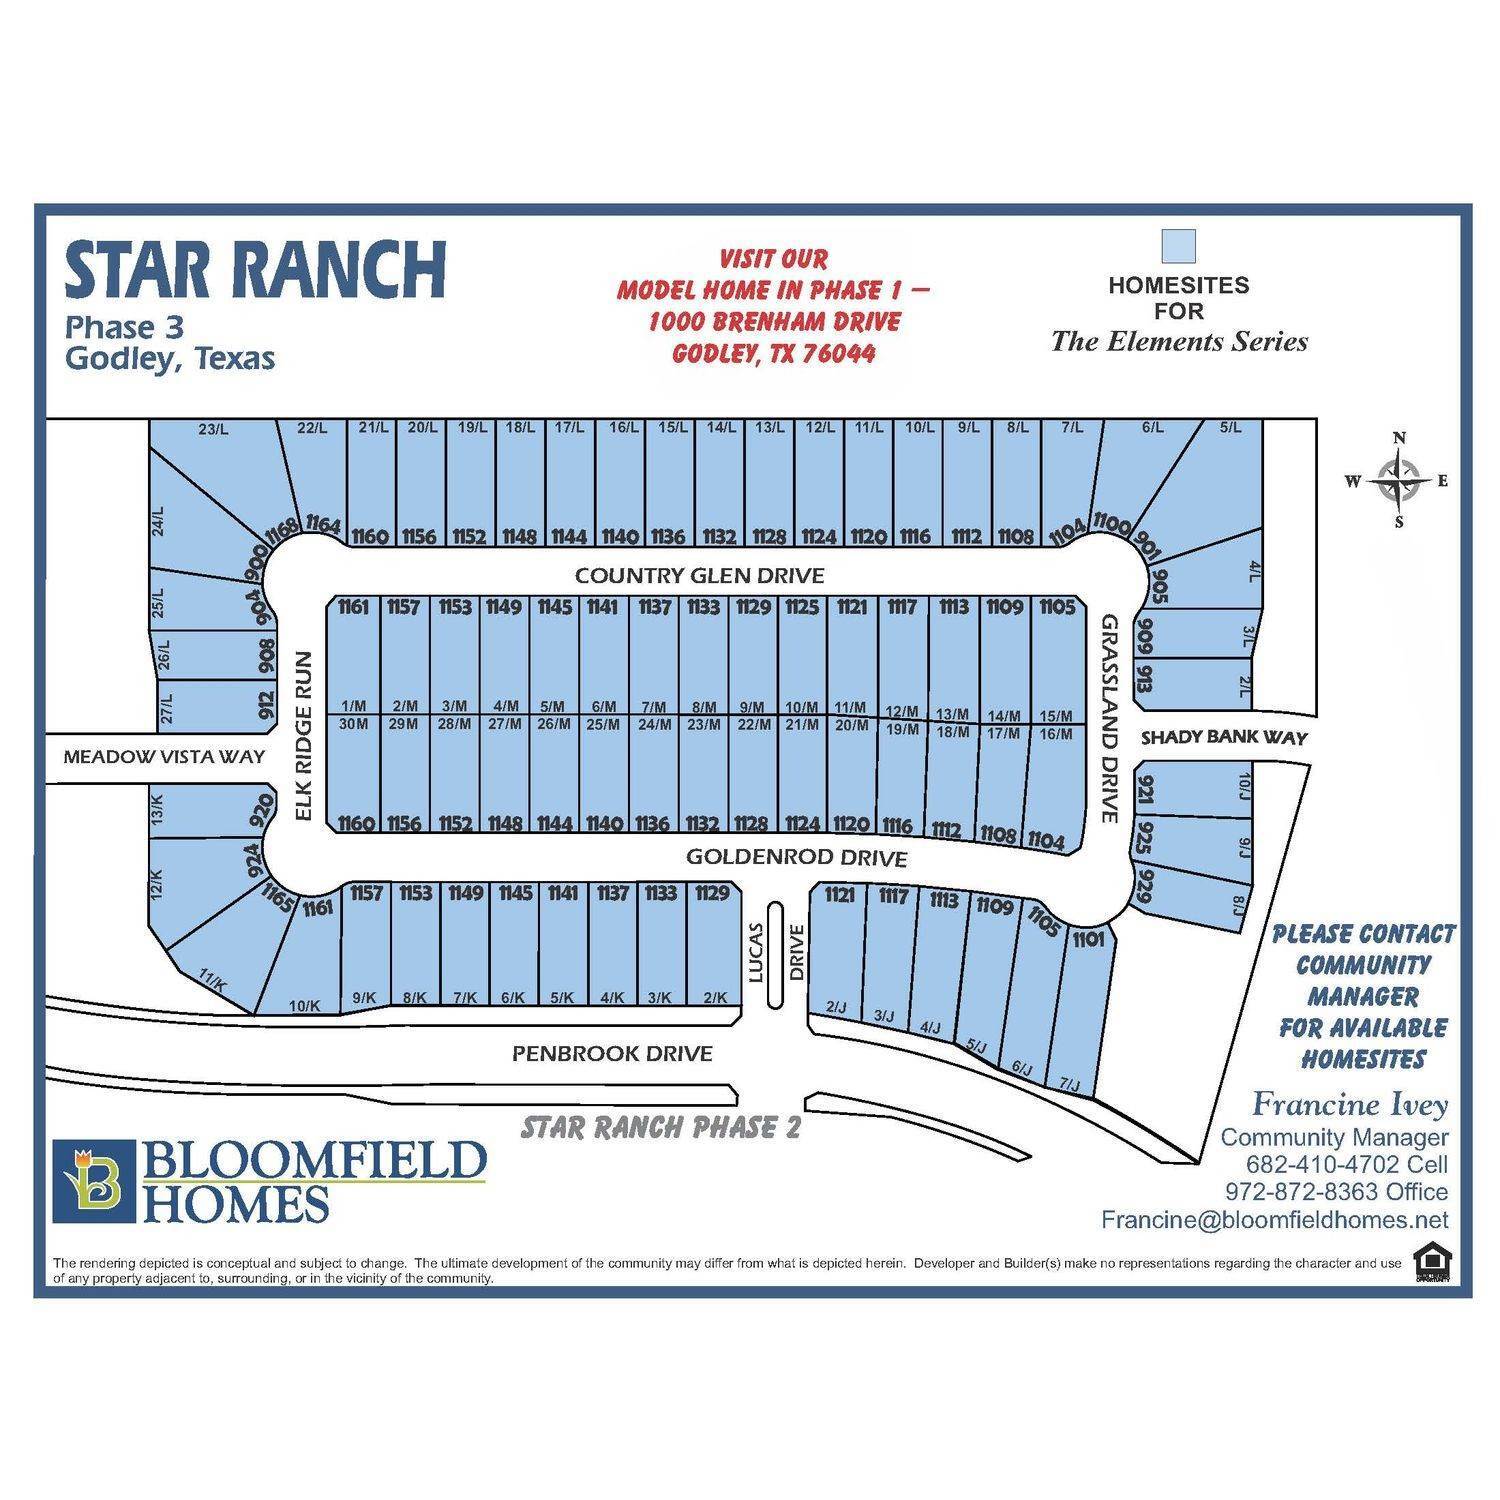 10. Star Ranch building at 1000 Brenham Drive, Godley, TX 76044